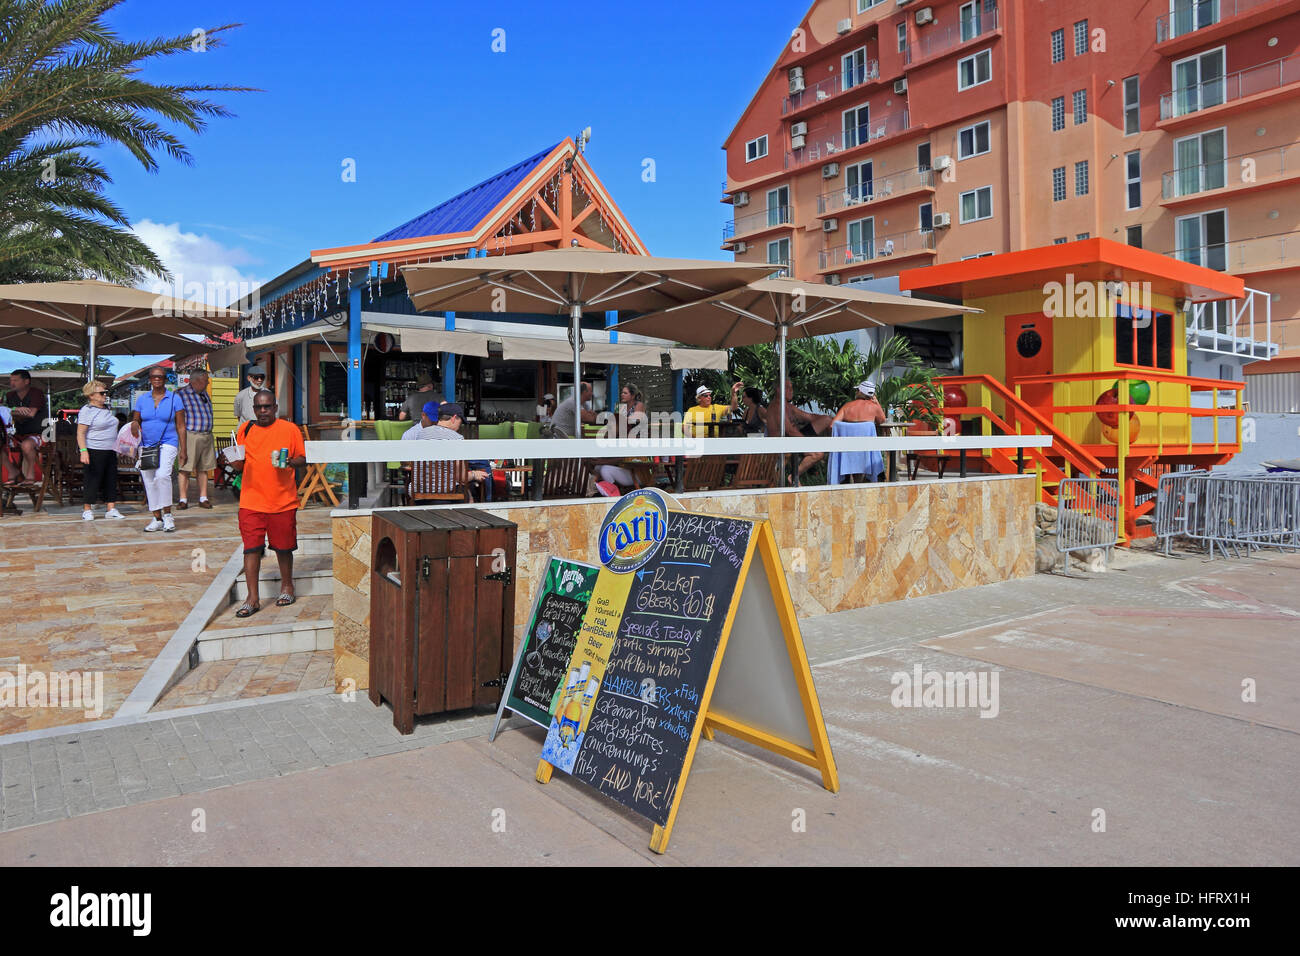 Layback bar and restaurant, city beach, Philipsburg, St Maarten Stock Photo